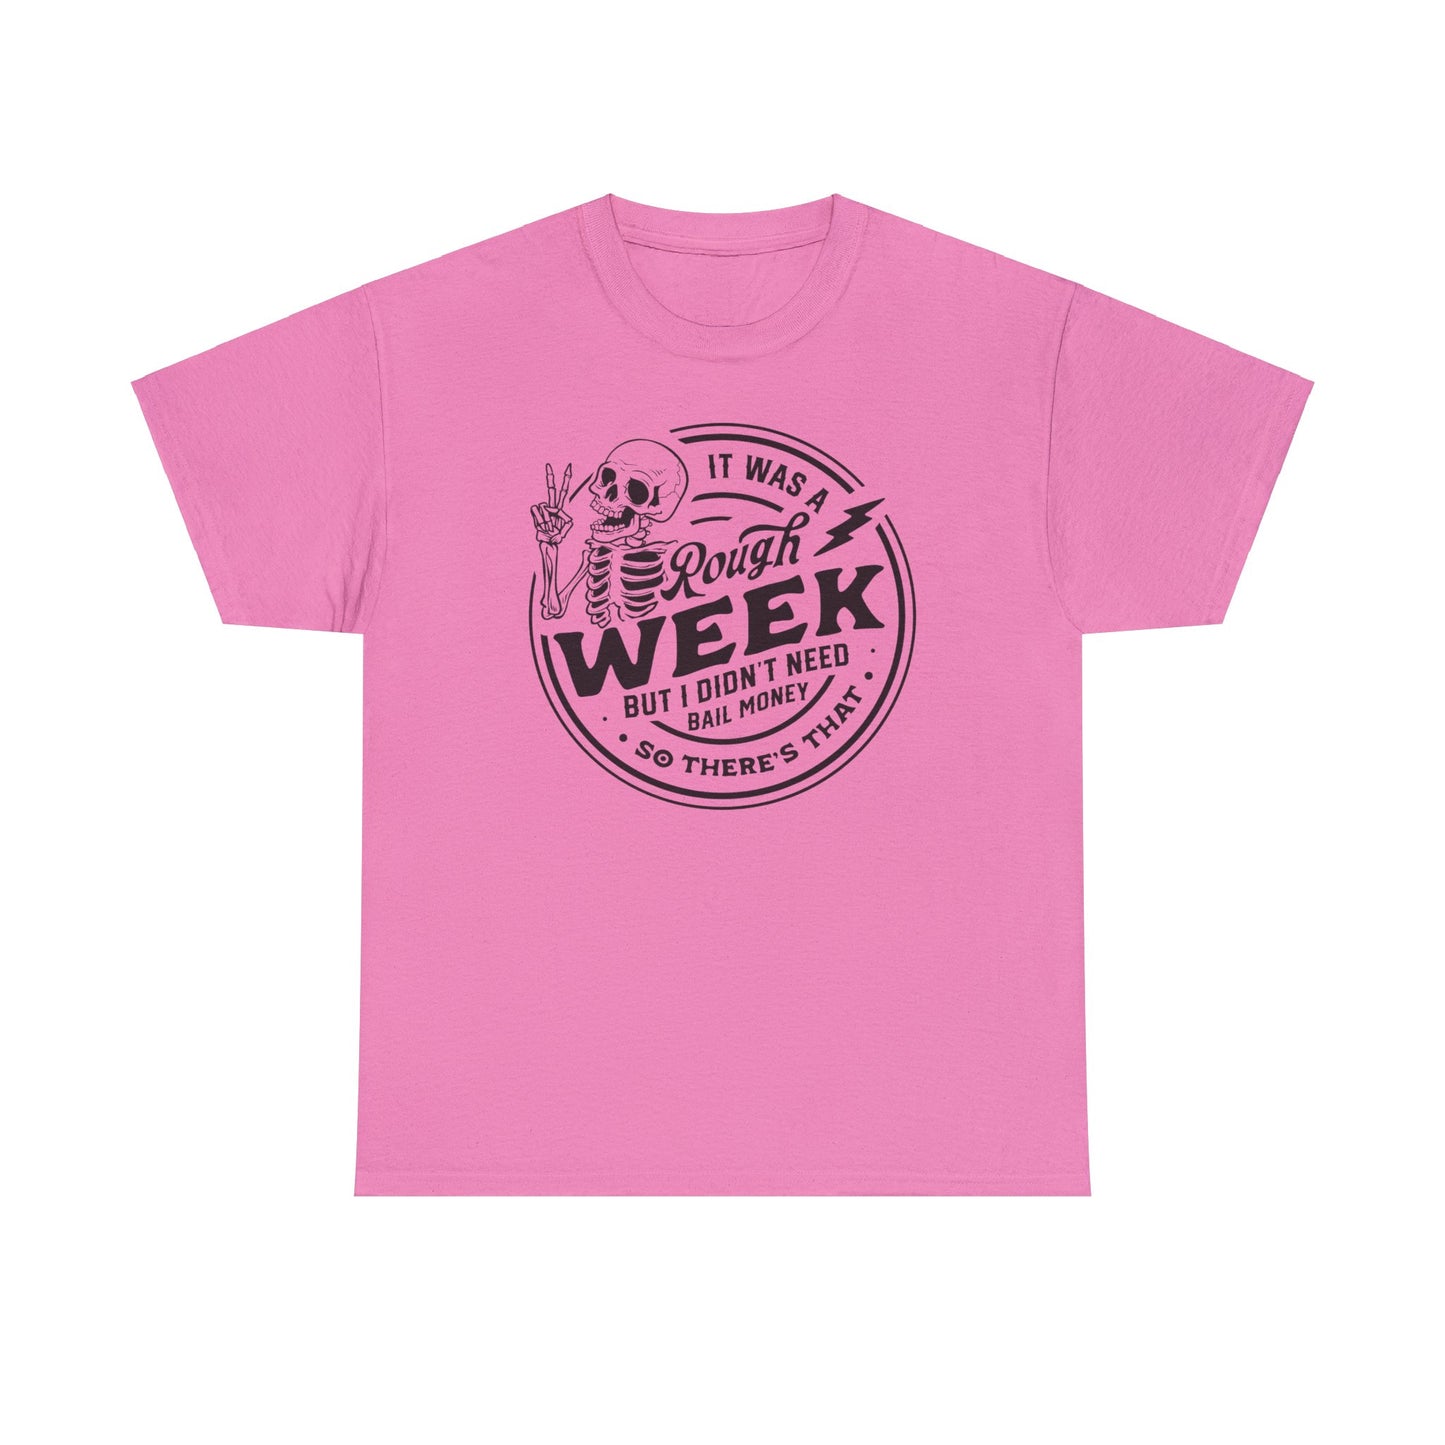 Rough Week T-Shirt For Bail Money T Shirt For Sarcastic Humor TShirt